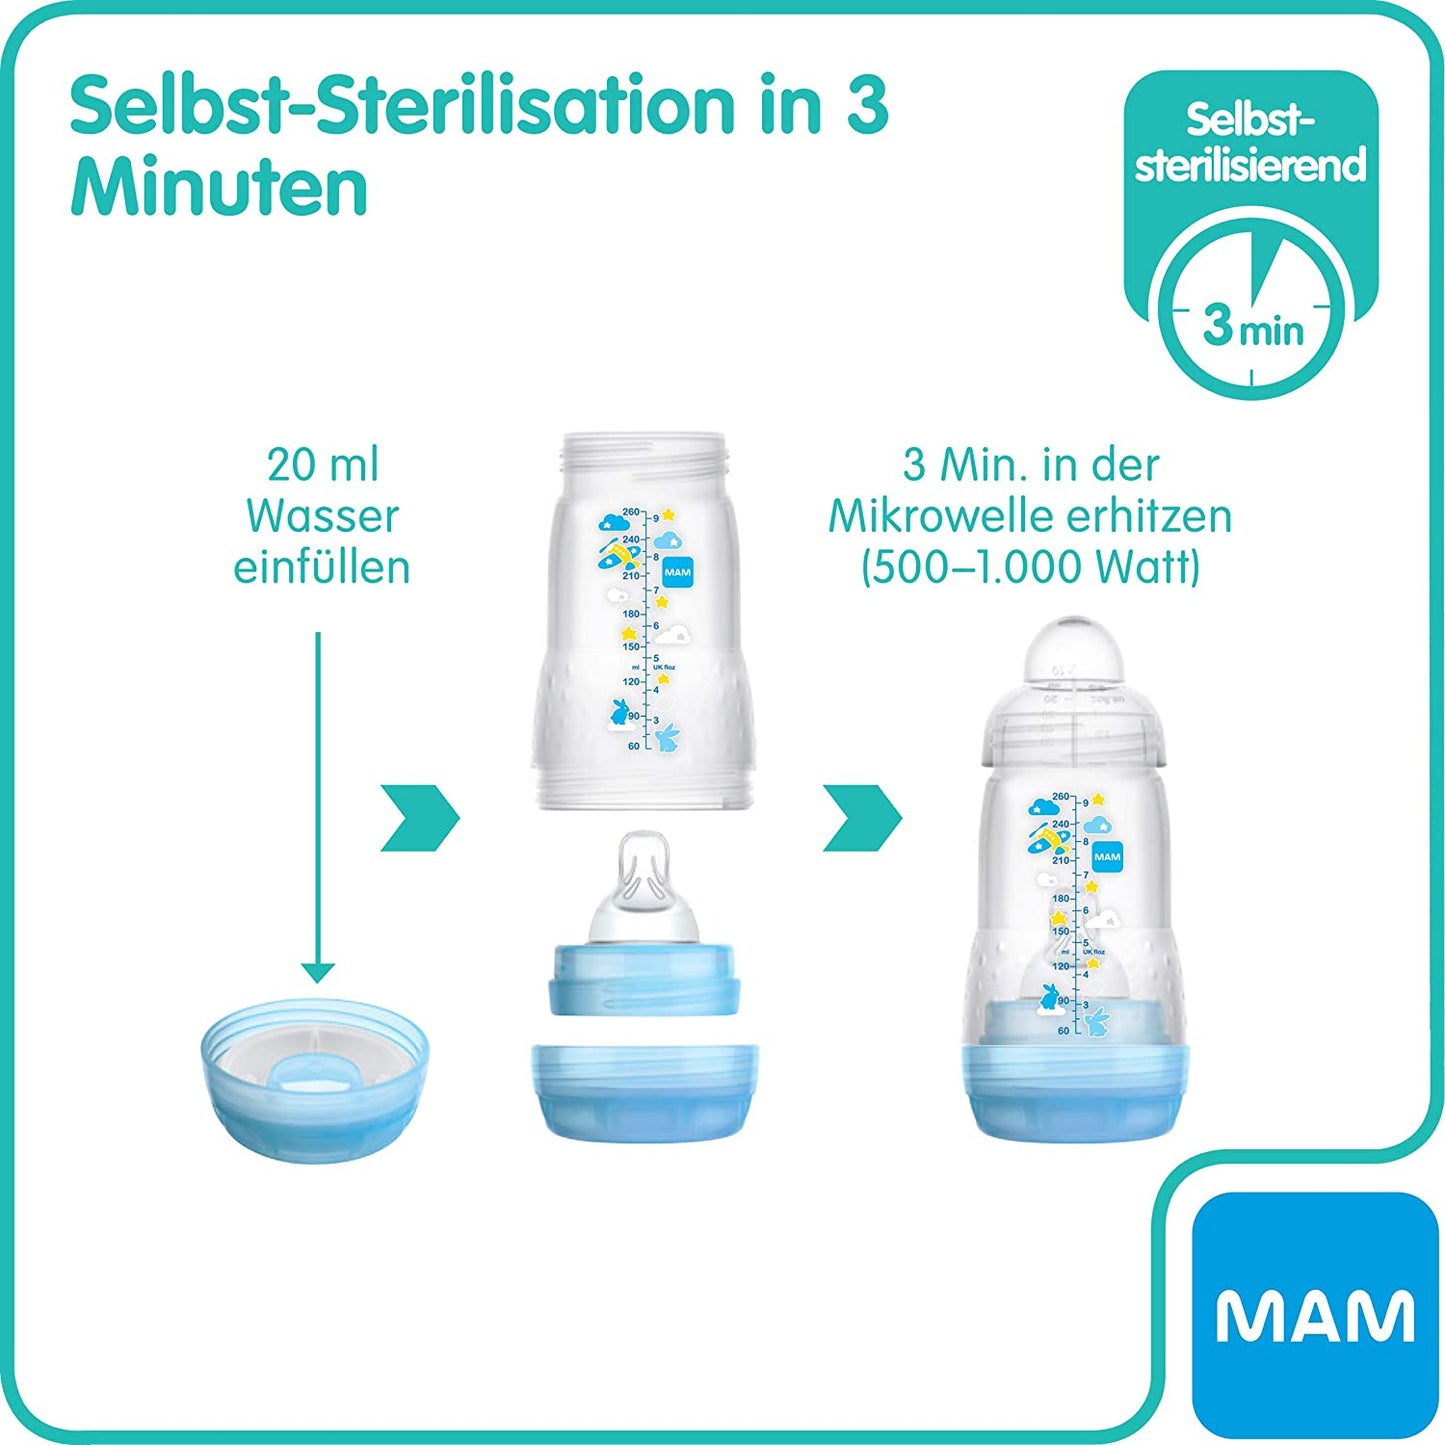 MAM Easy Start Mamadeiras Anti-Cólica - Kit 2x 260 ml